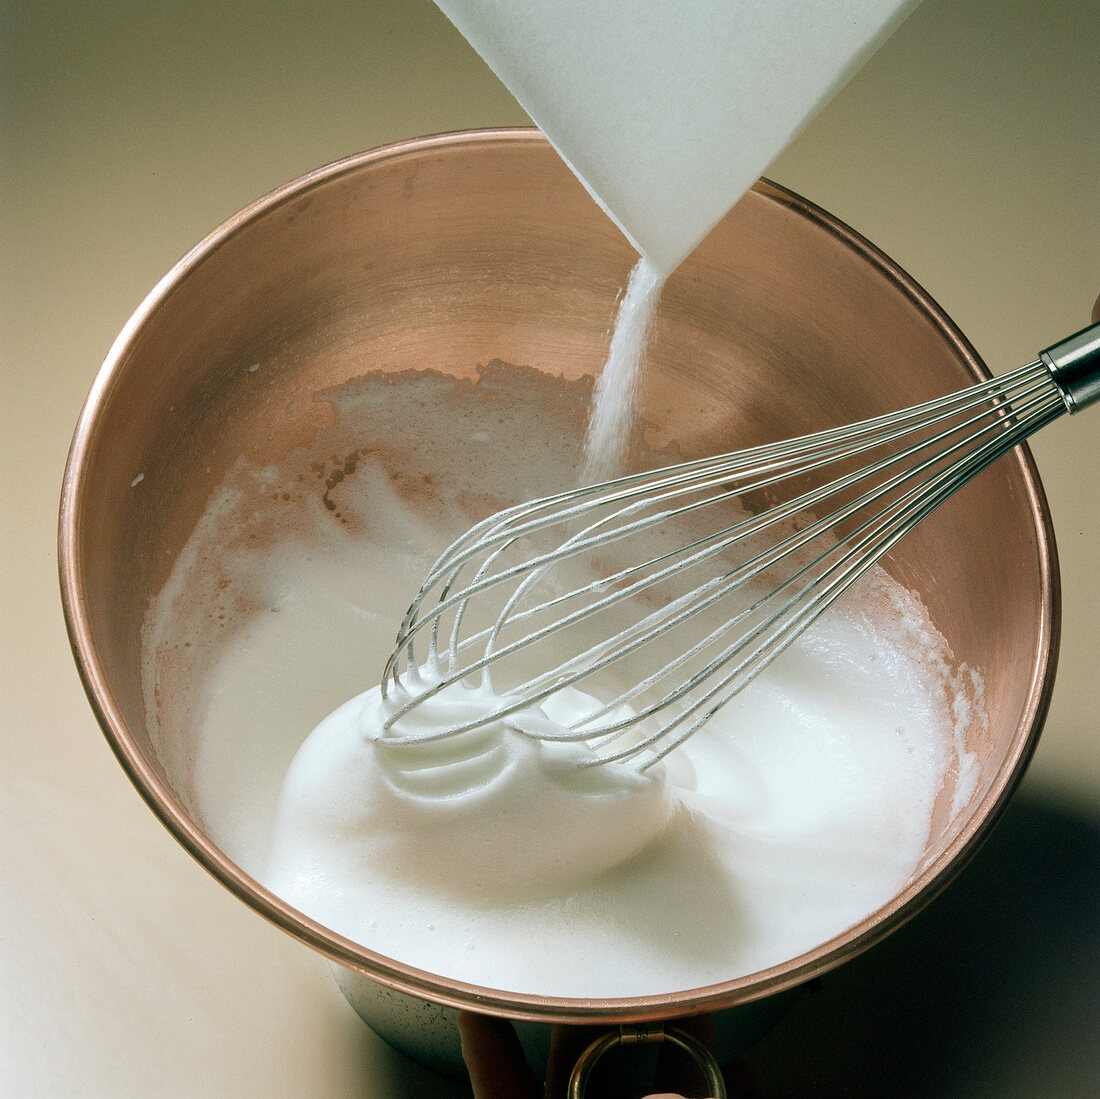 Sugar being added in cream for preparation of meringue, step 3